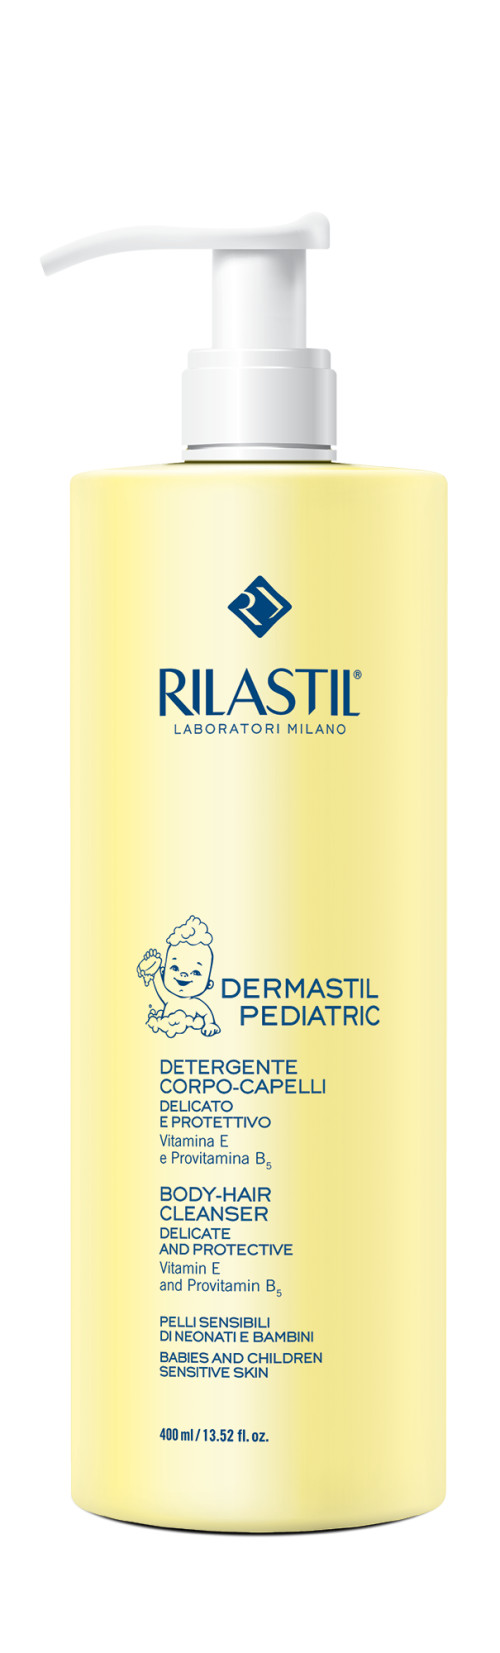 Rilastil Dermastil Pediatric Detergente 400 ml, per neonati e